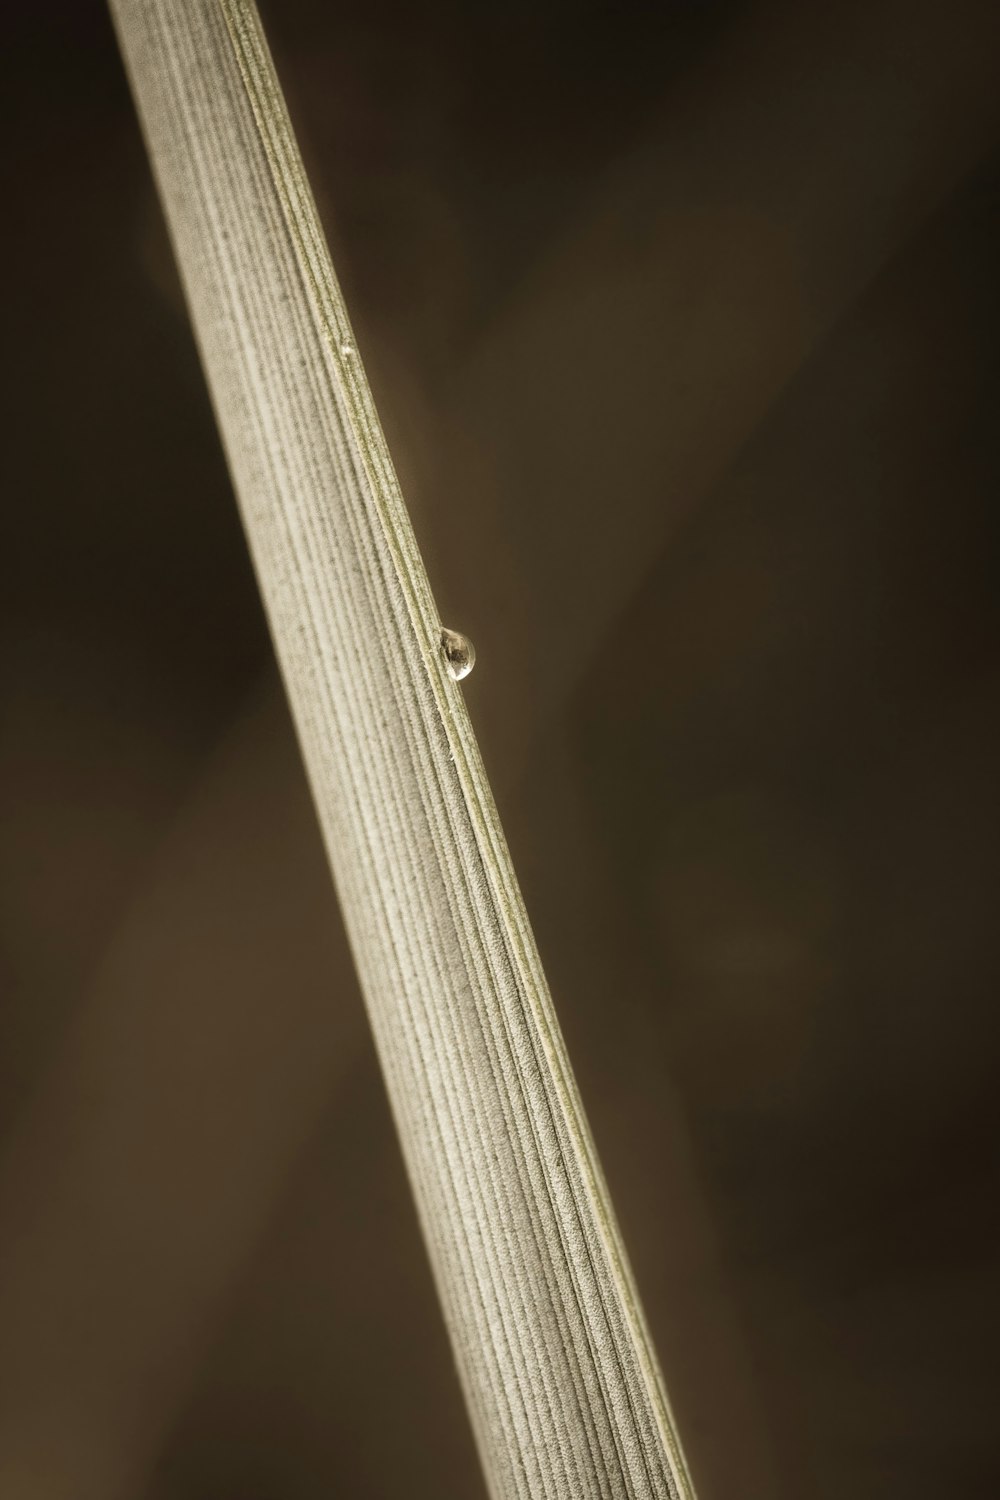 a close up of a blade